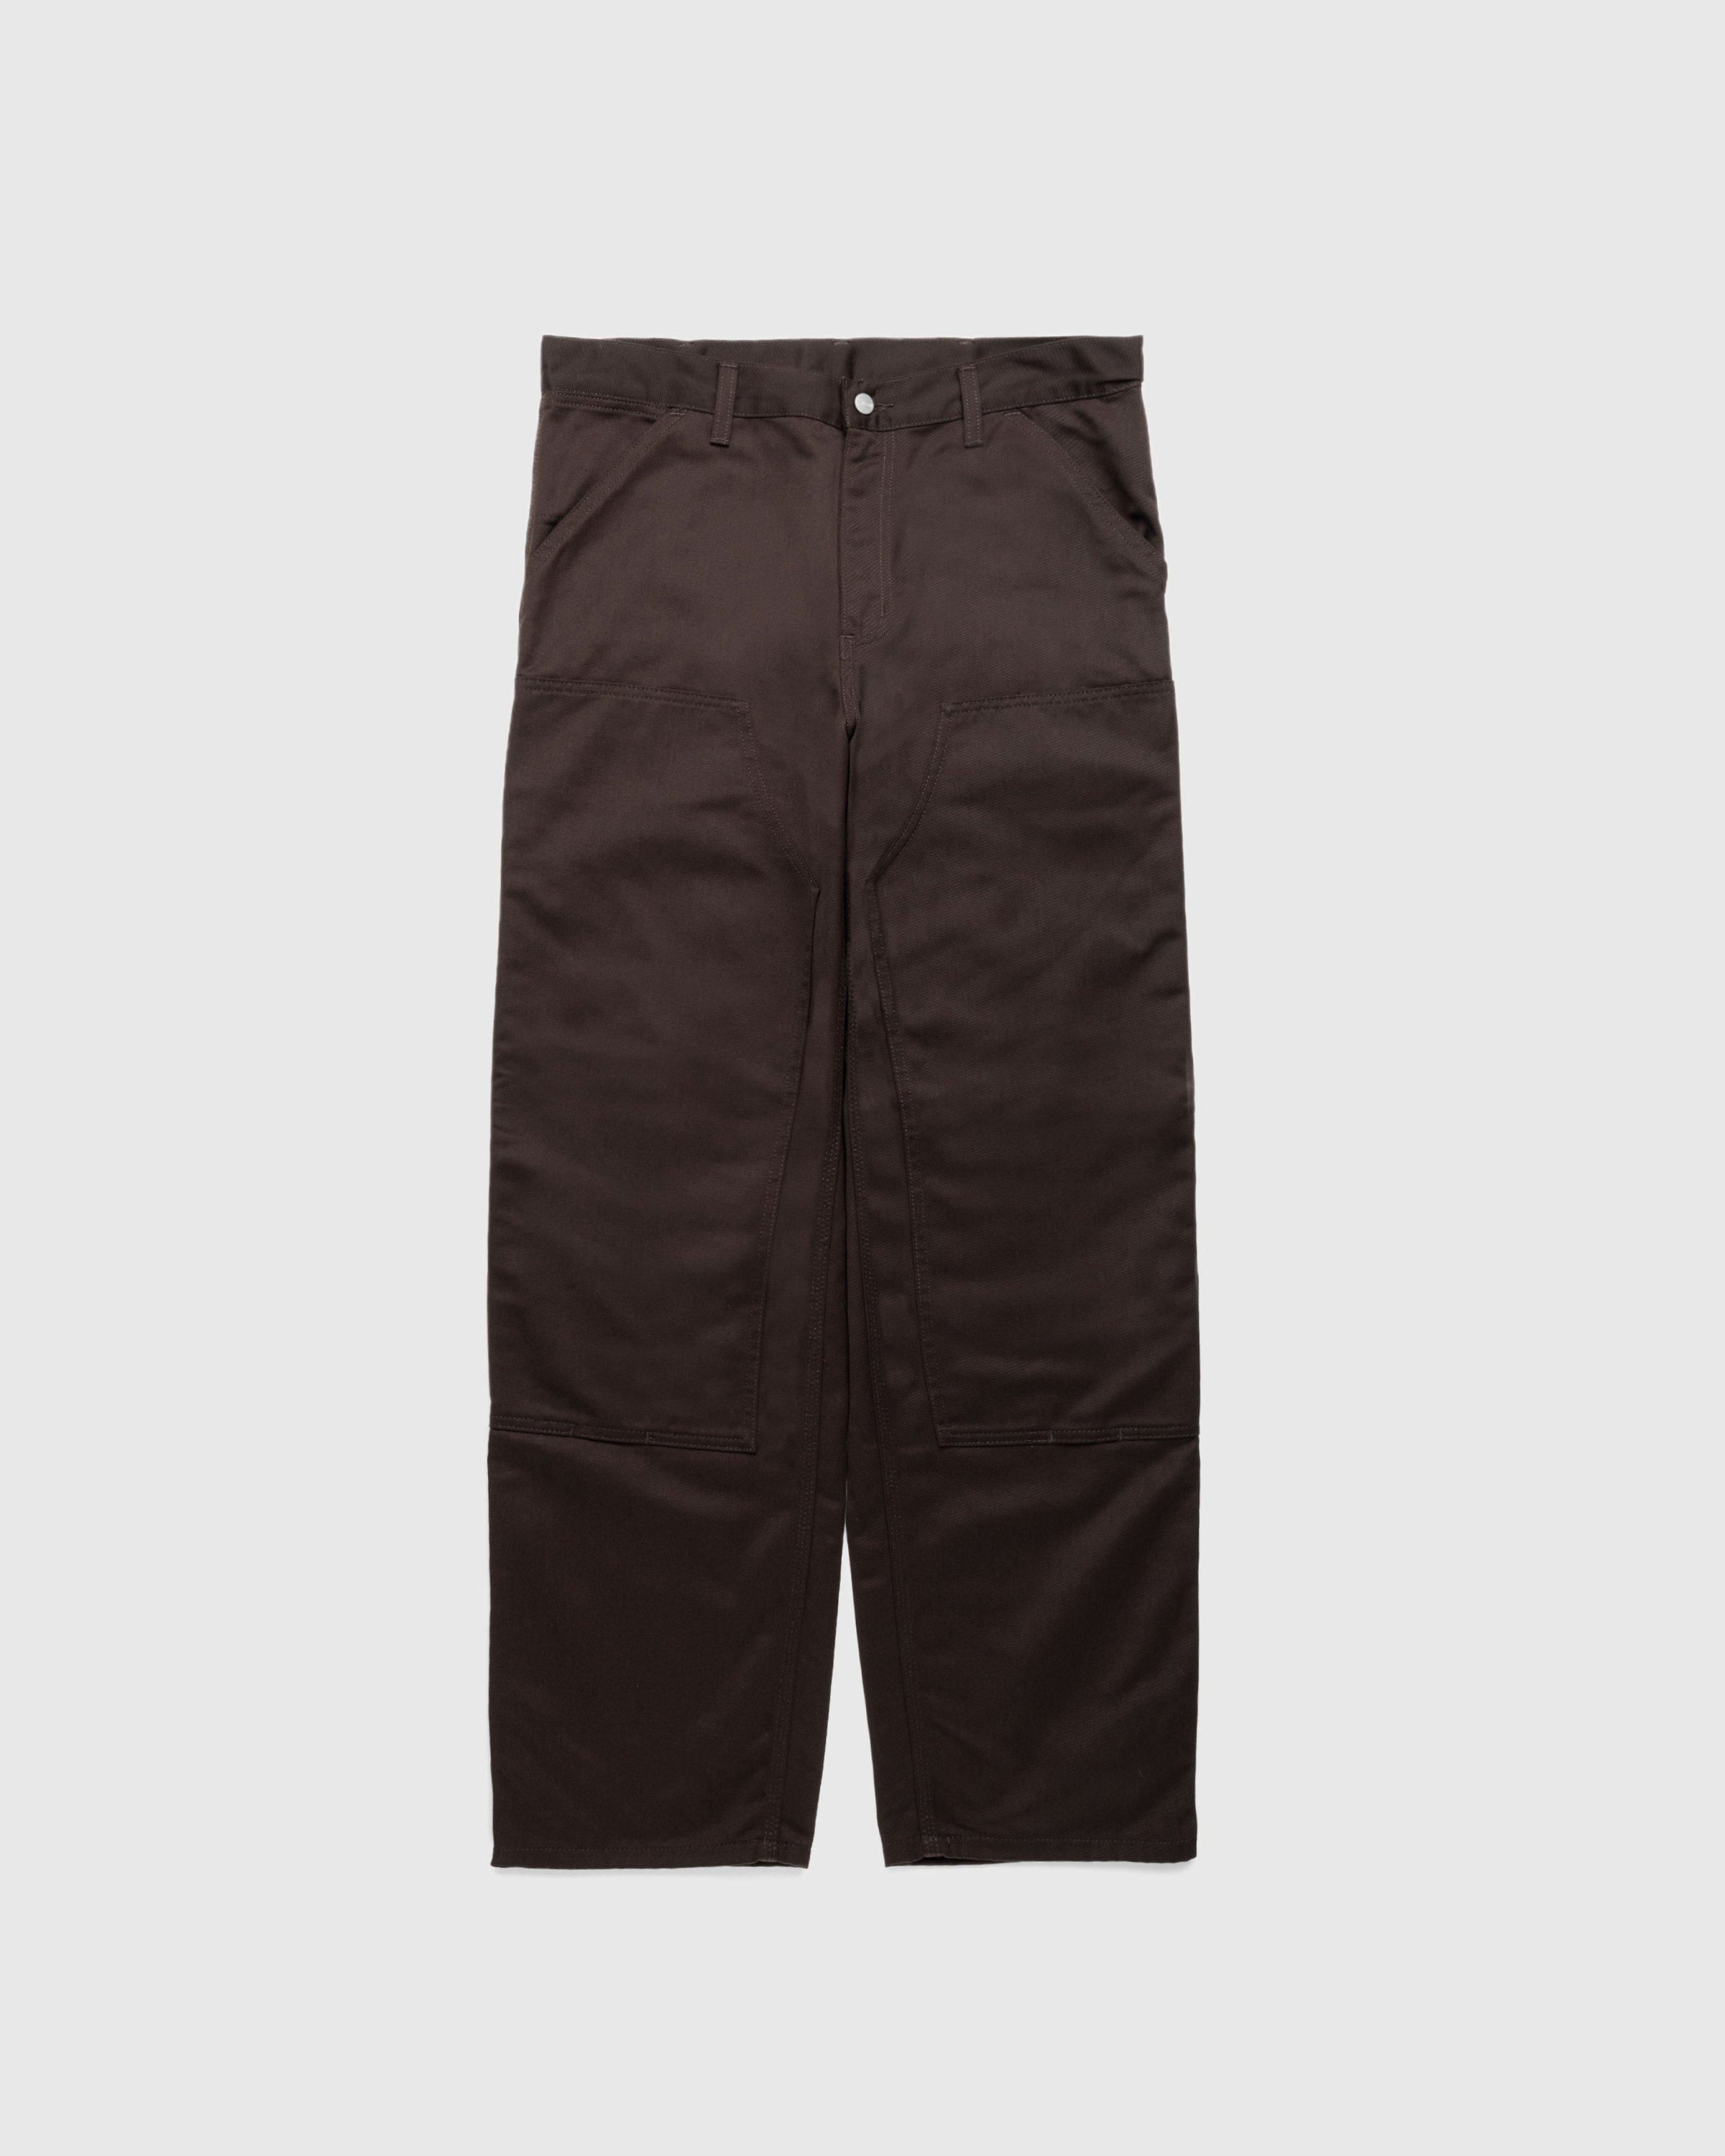 Carhartt WIP - Double Knee Pant Tobacco/Rinsed - Clothing - Brown - Image 1